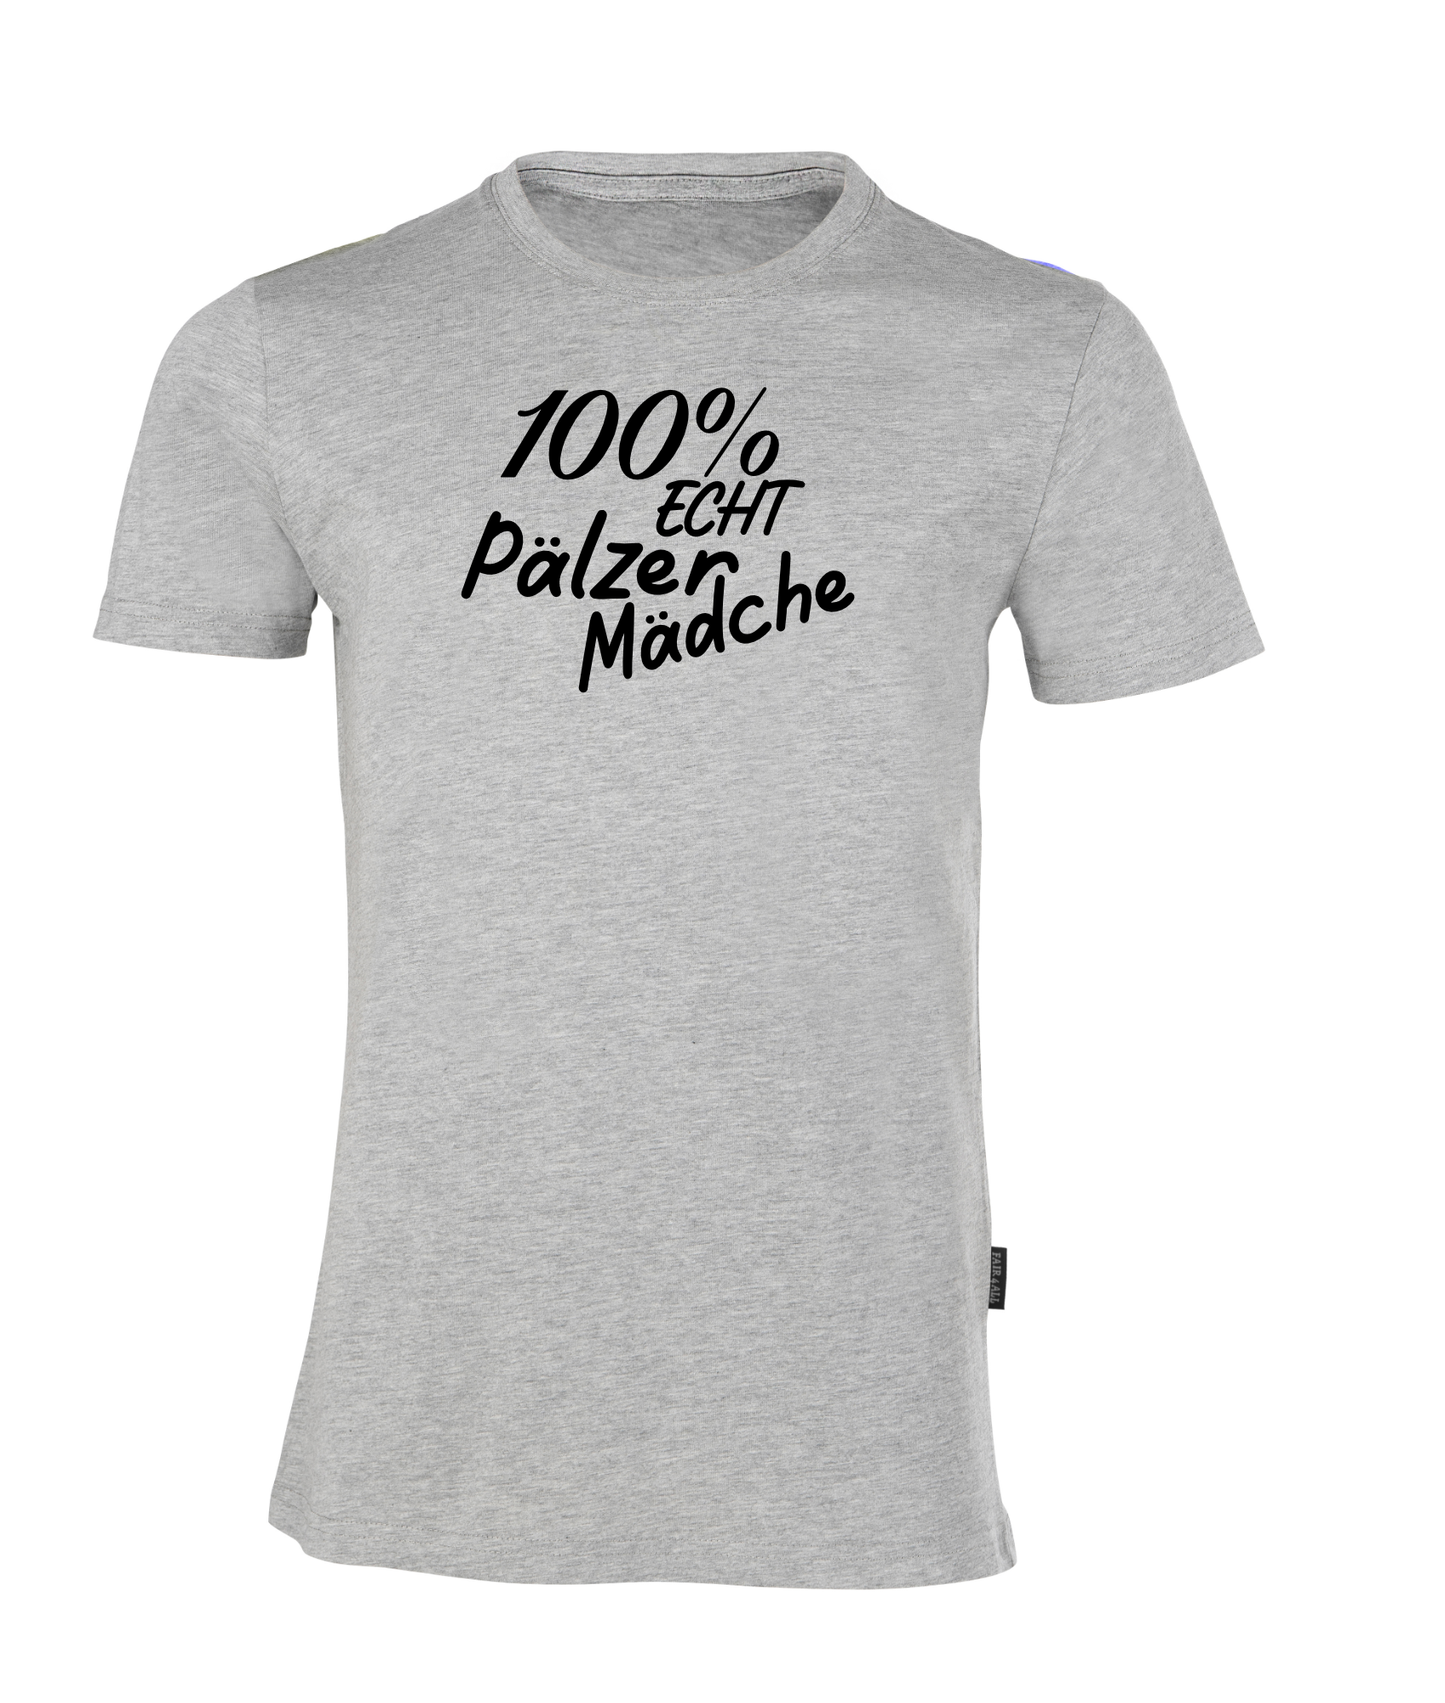 100% Pälzer Mädche - pREHmium T-Shirt Unisex